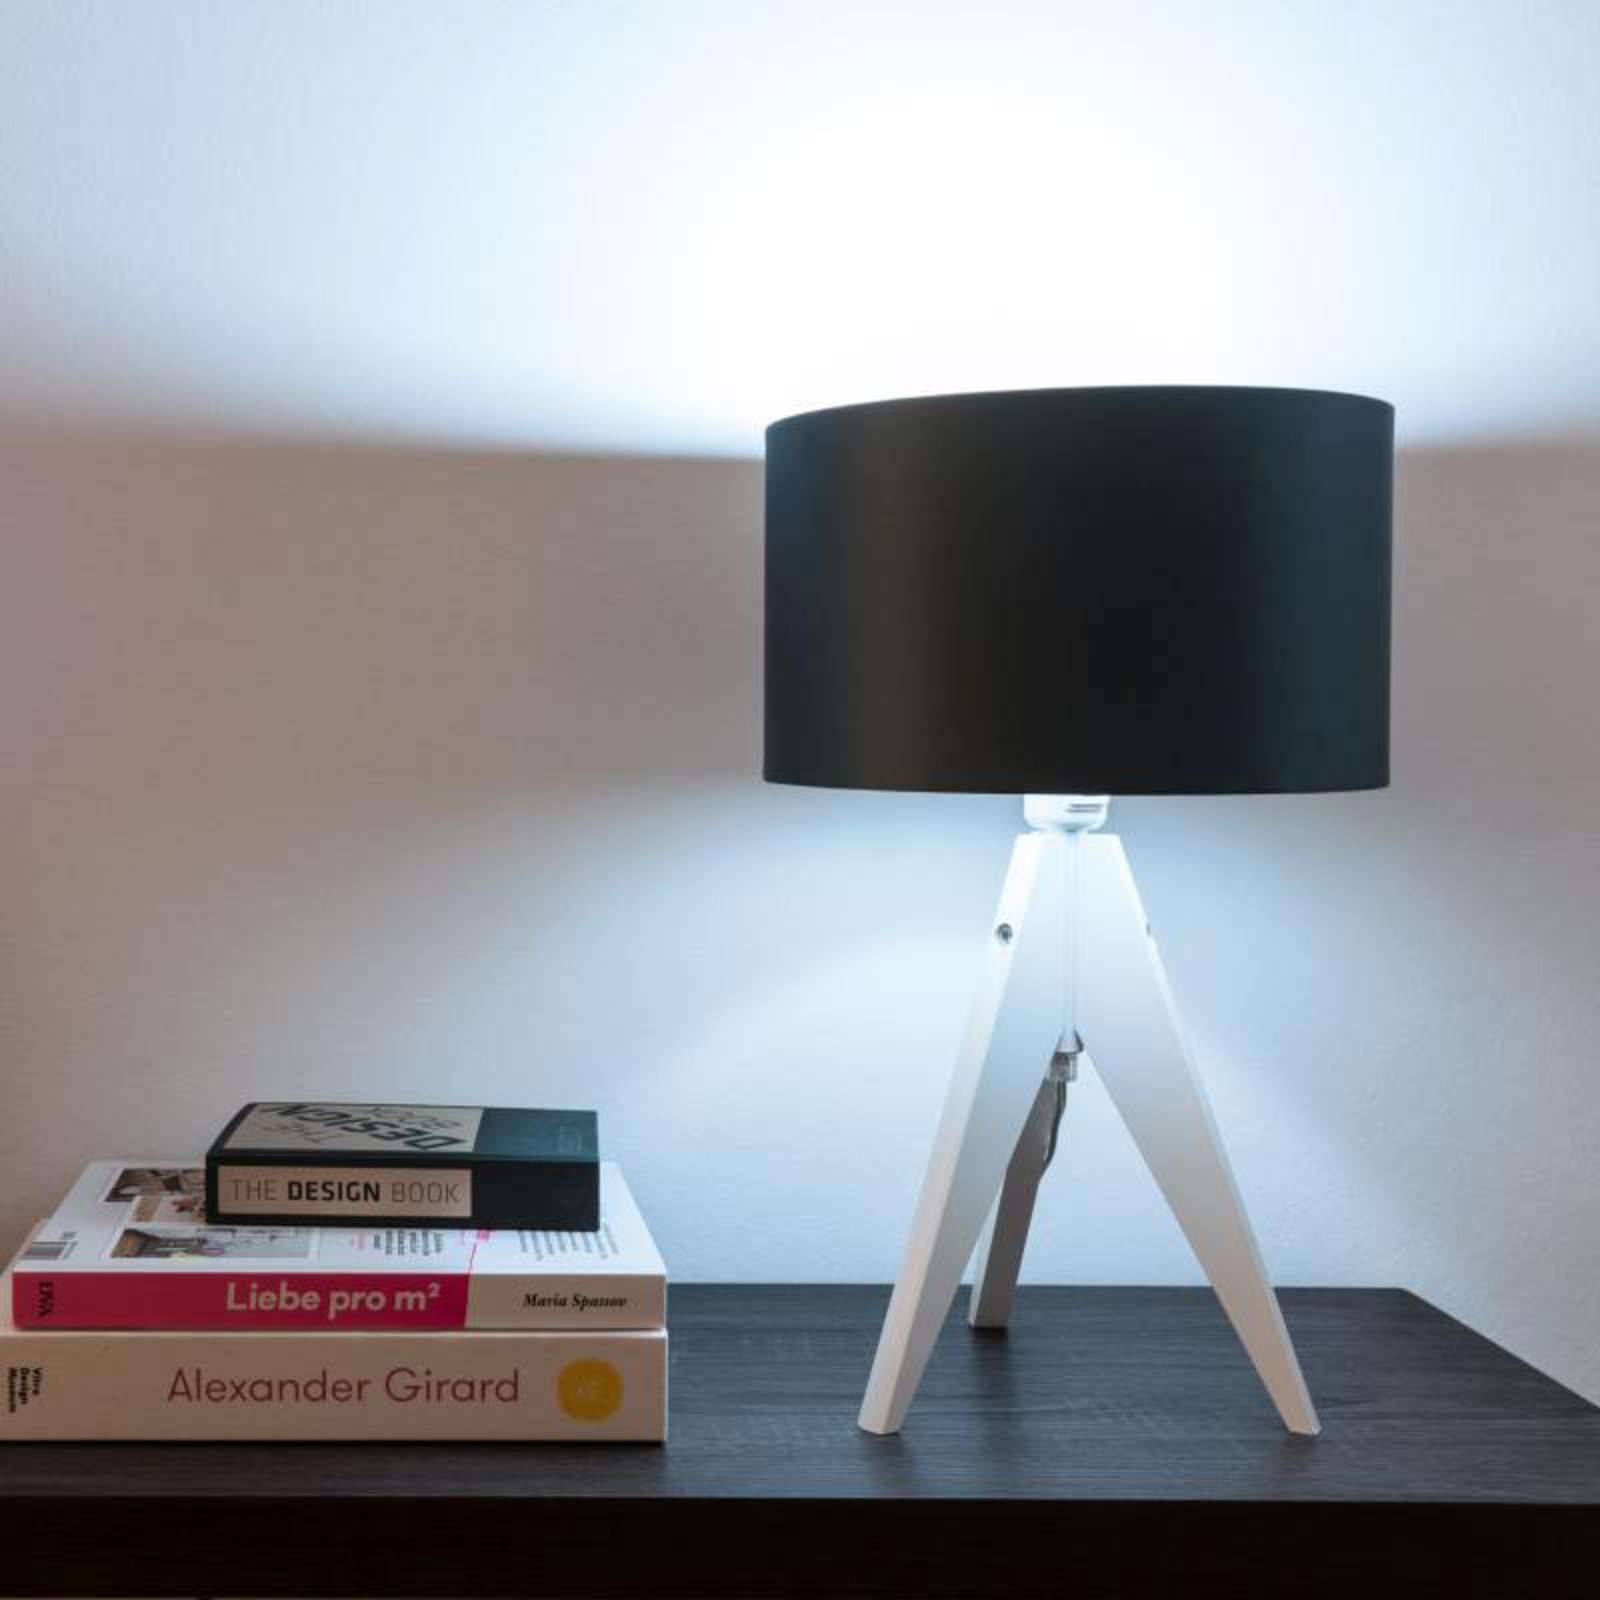 Müller Licht tint white lampadina LED E27 9W, CCT